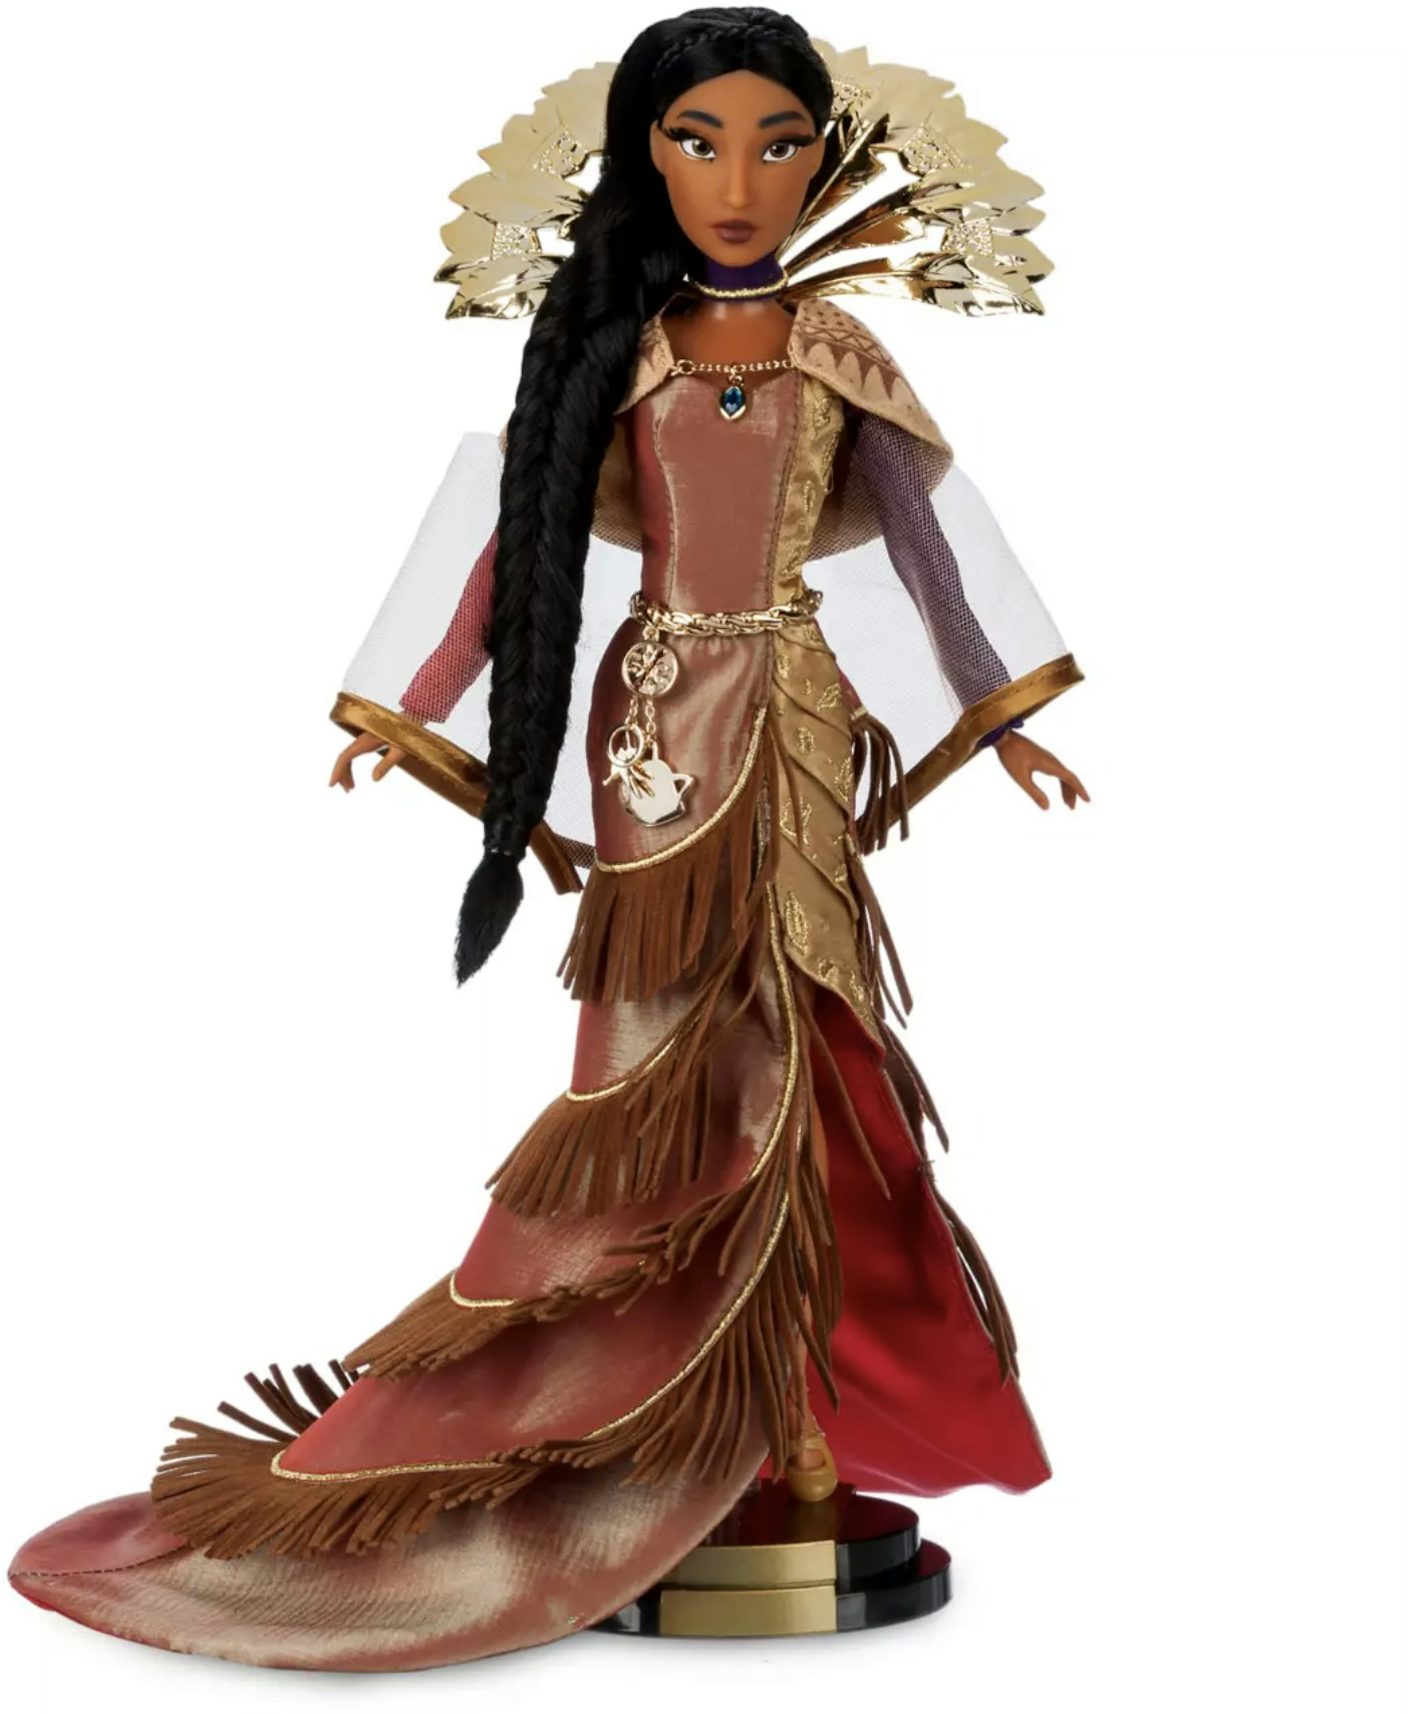 https://images.stockx.com/images/Disney-Designer-Collection-Ultimate-Princess-Celebration-Pocahontas-Doll.jpg?fit=fill&bg=FFFFFF&w=1200&h=857&fm=jpg&auto=compress&dpr=2&trim=color&updated_at=1637692695&q=60